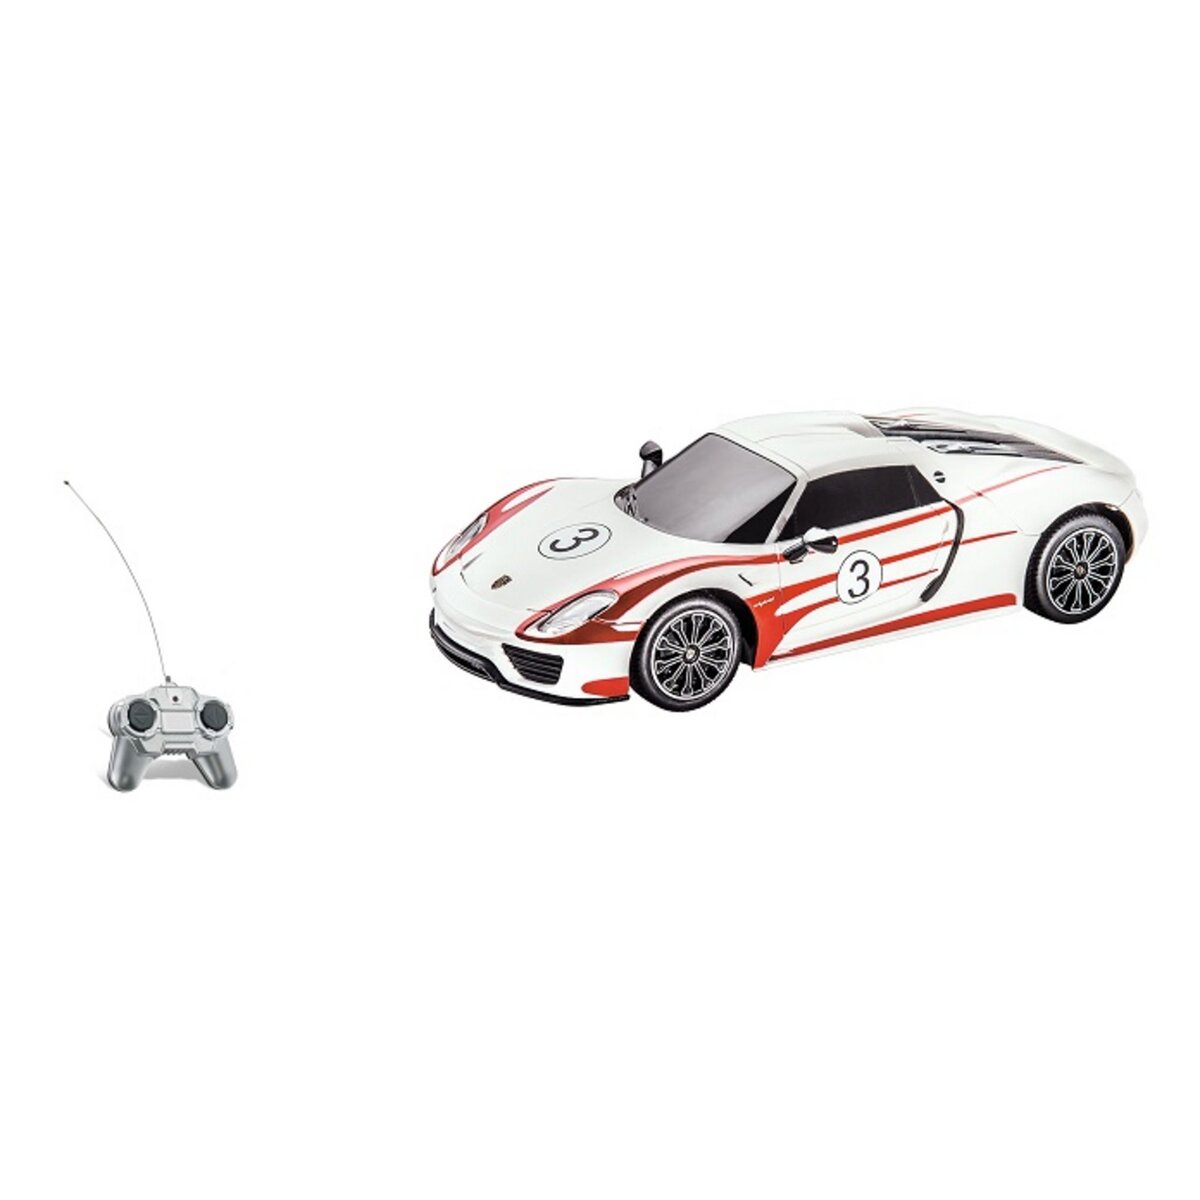 MONDO Porsche 918 Racing radiocommandée